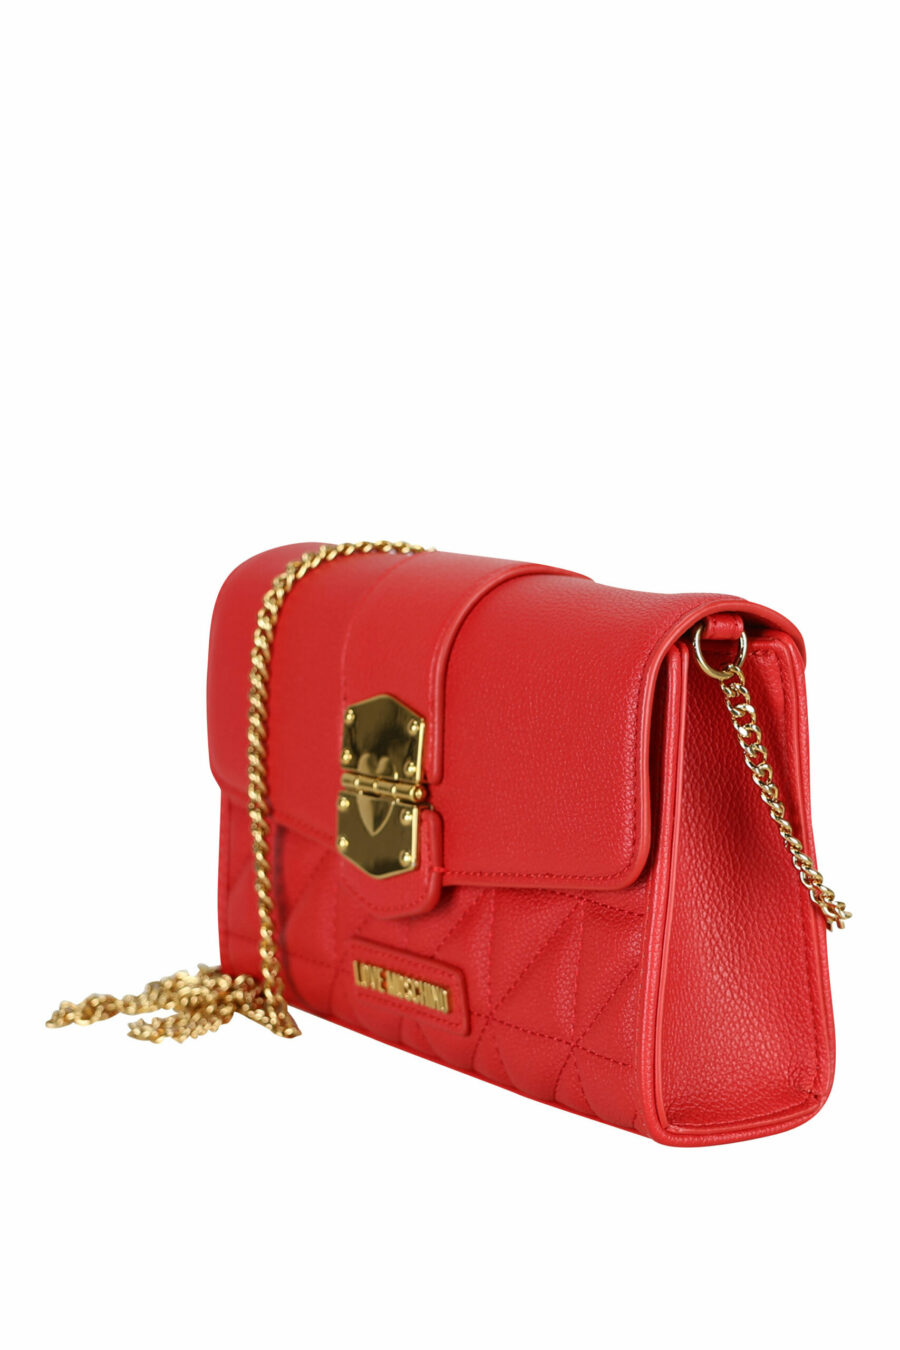 Red "flap" shoulder bag with gold metal heart logo - 8050537398776 1 scaled